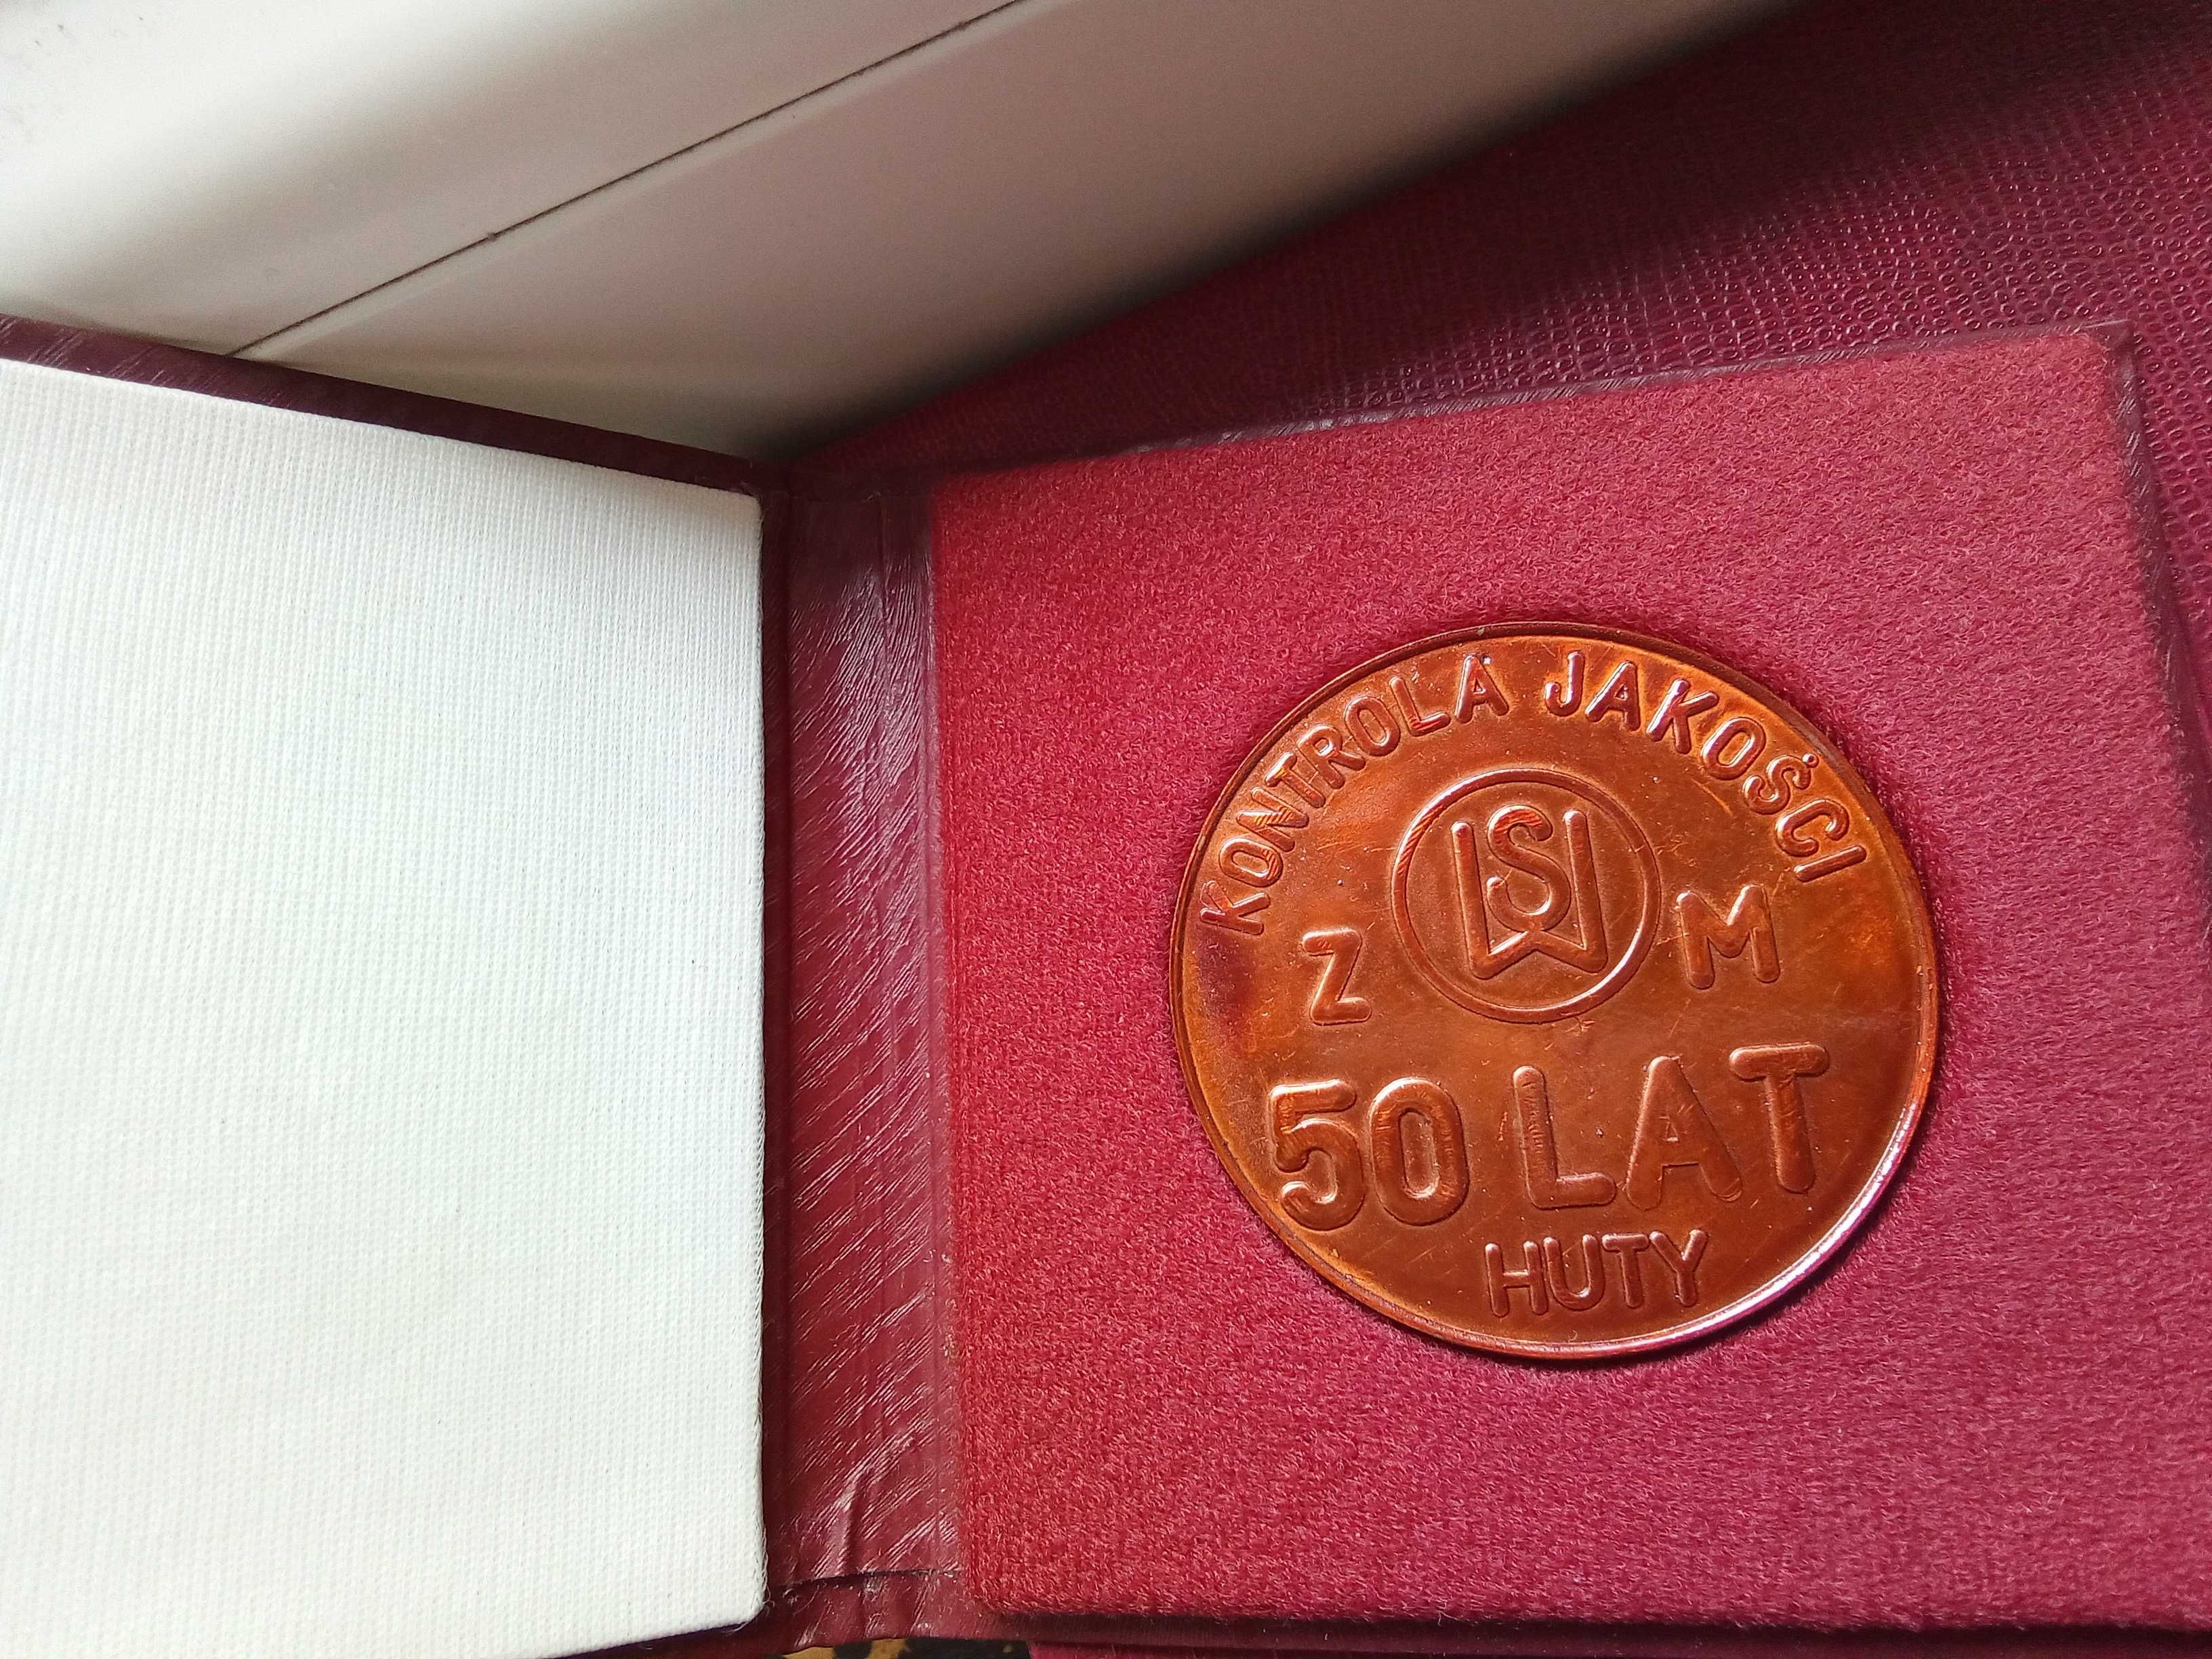 Medal pamiątkowy Huty Stalowa Wola 50 lat huty.